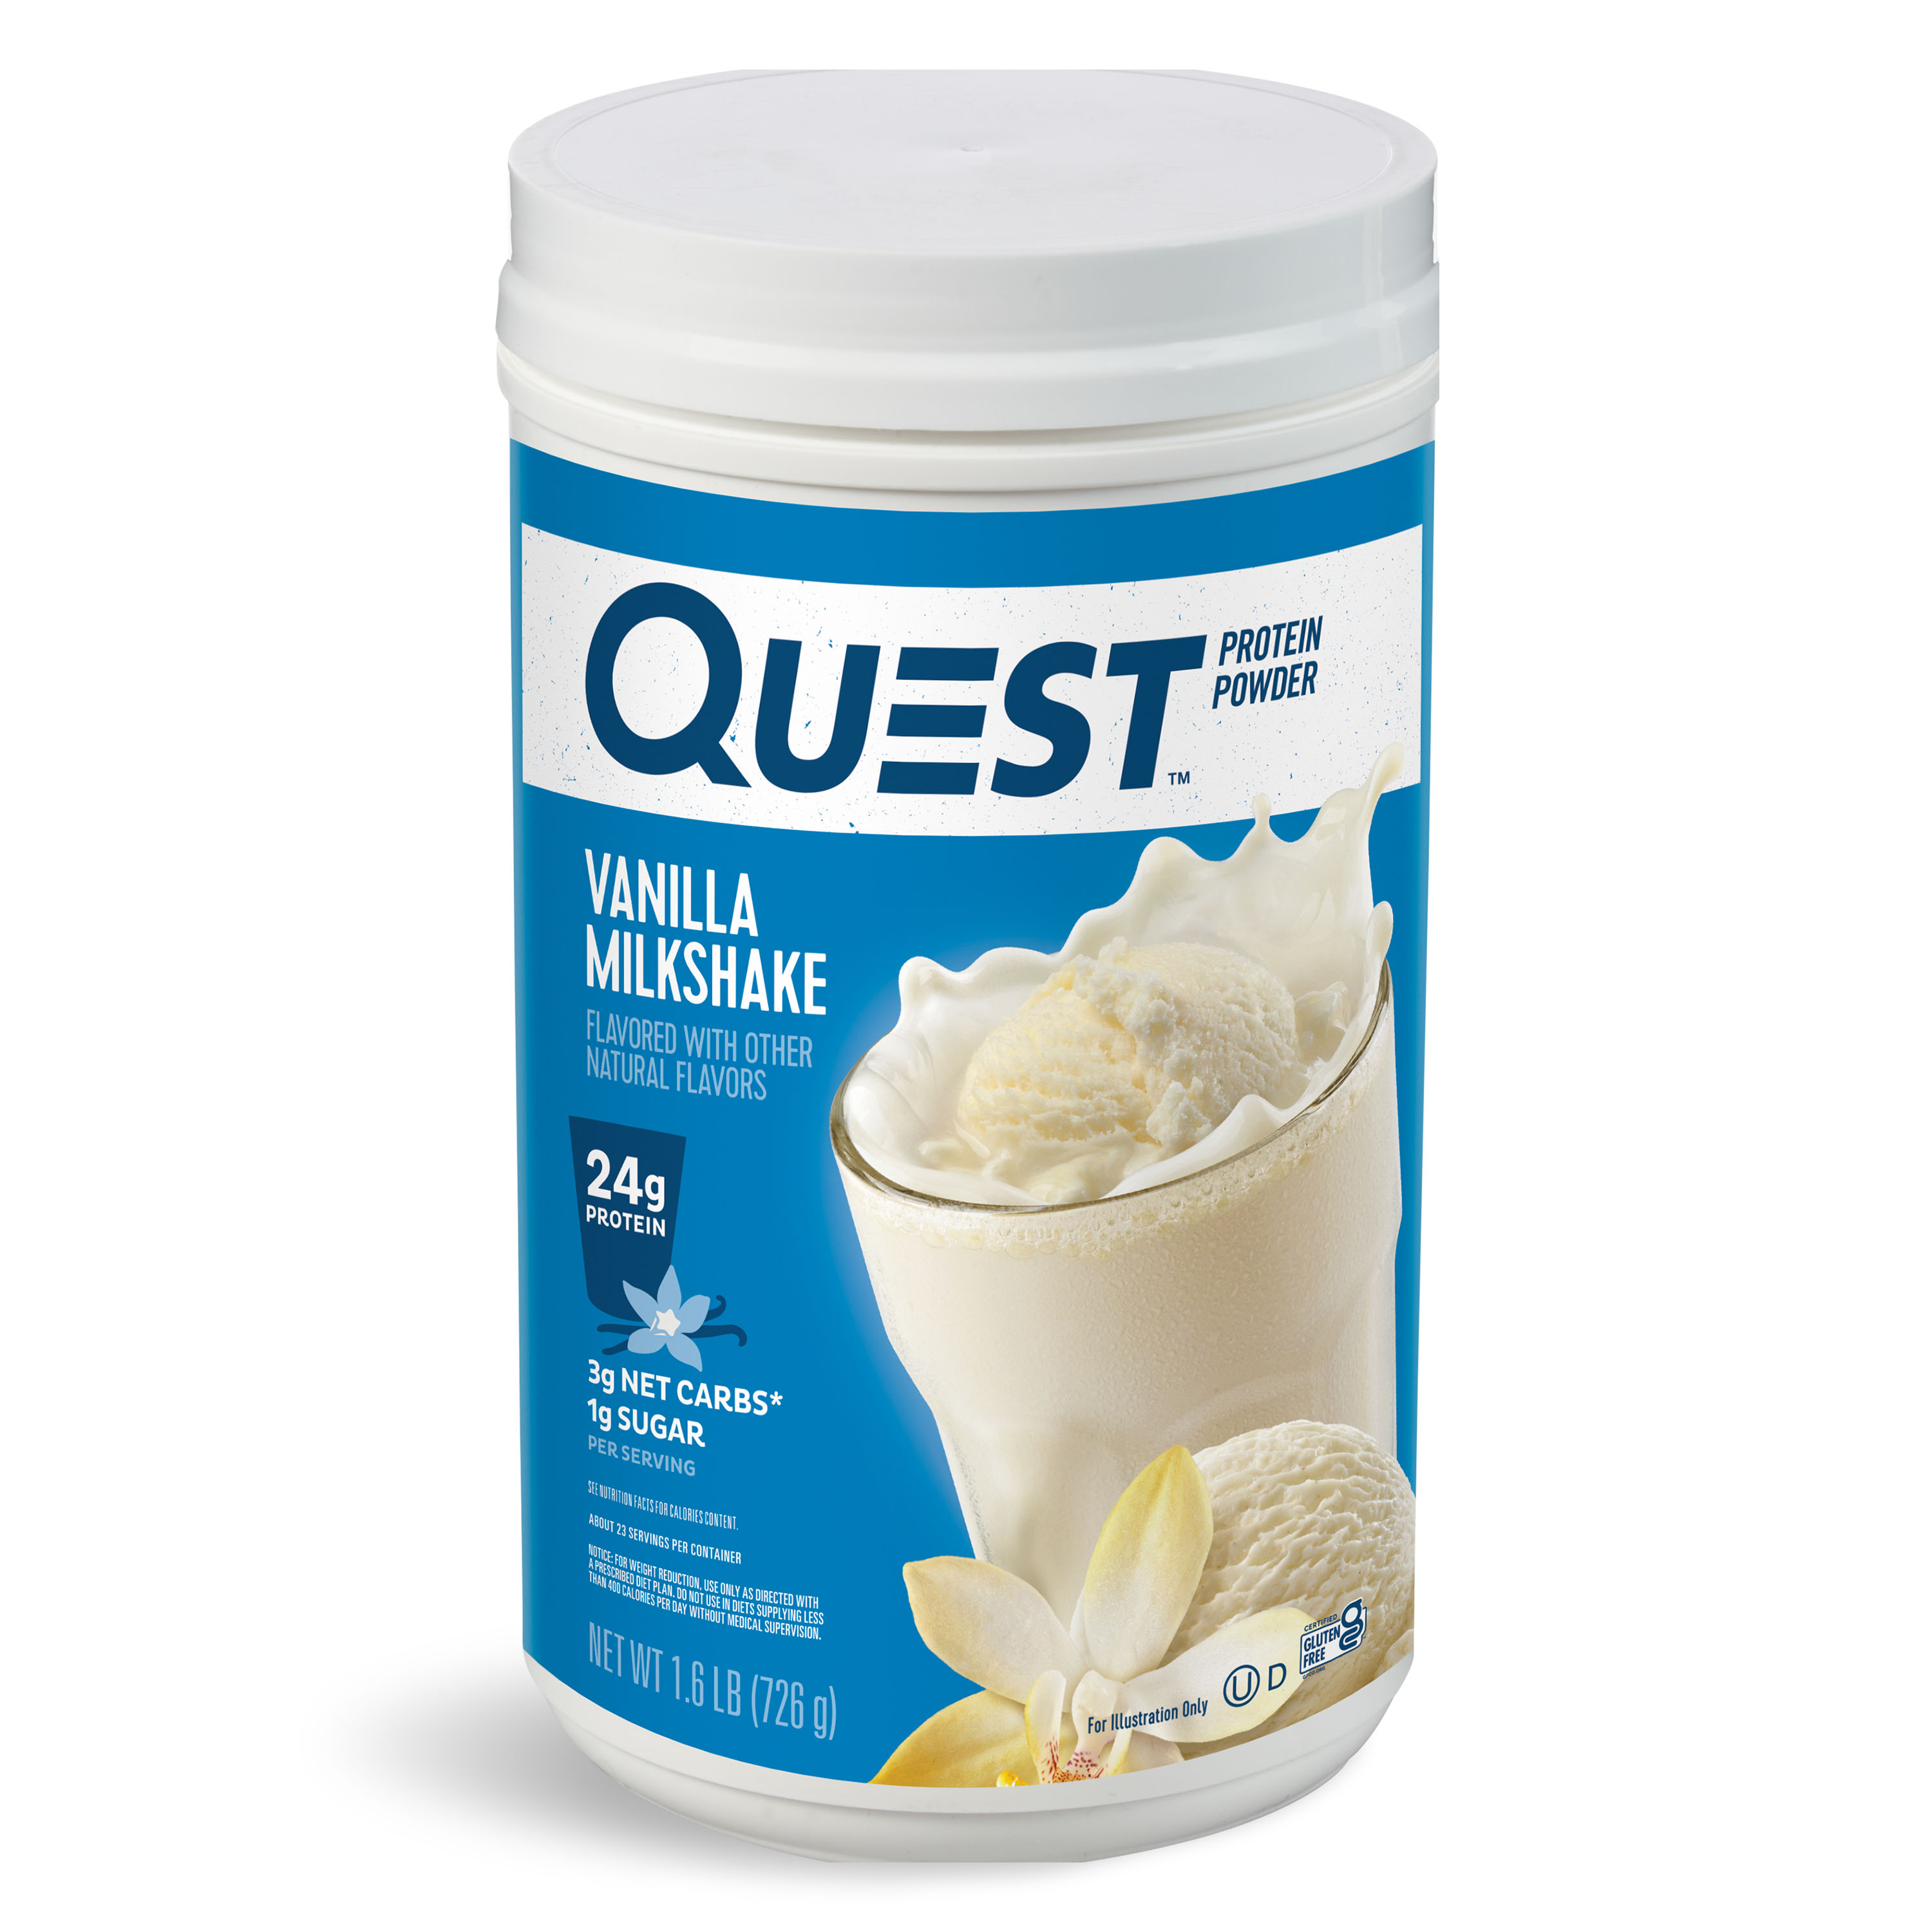 Quest Protein Powder, Vanilla Milkshake, 24g Protein, 1.6 lb., 25.6 oz - image 1 of 8